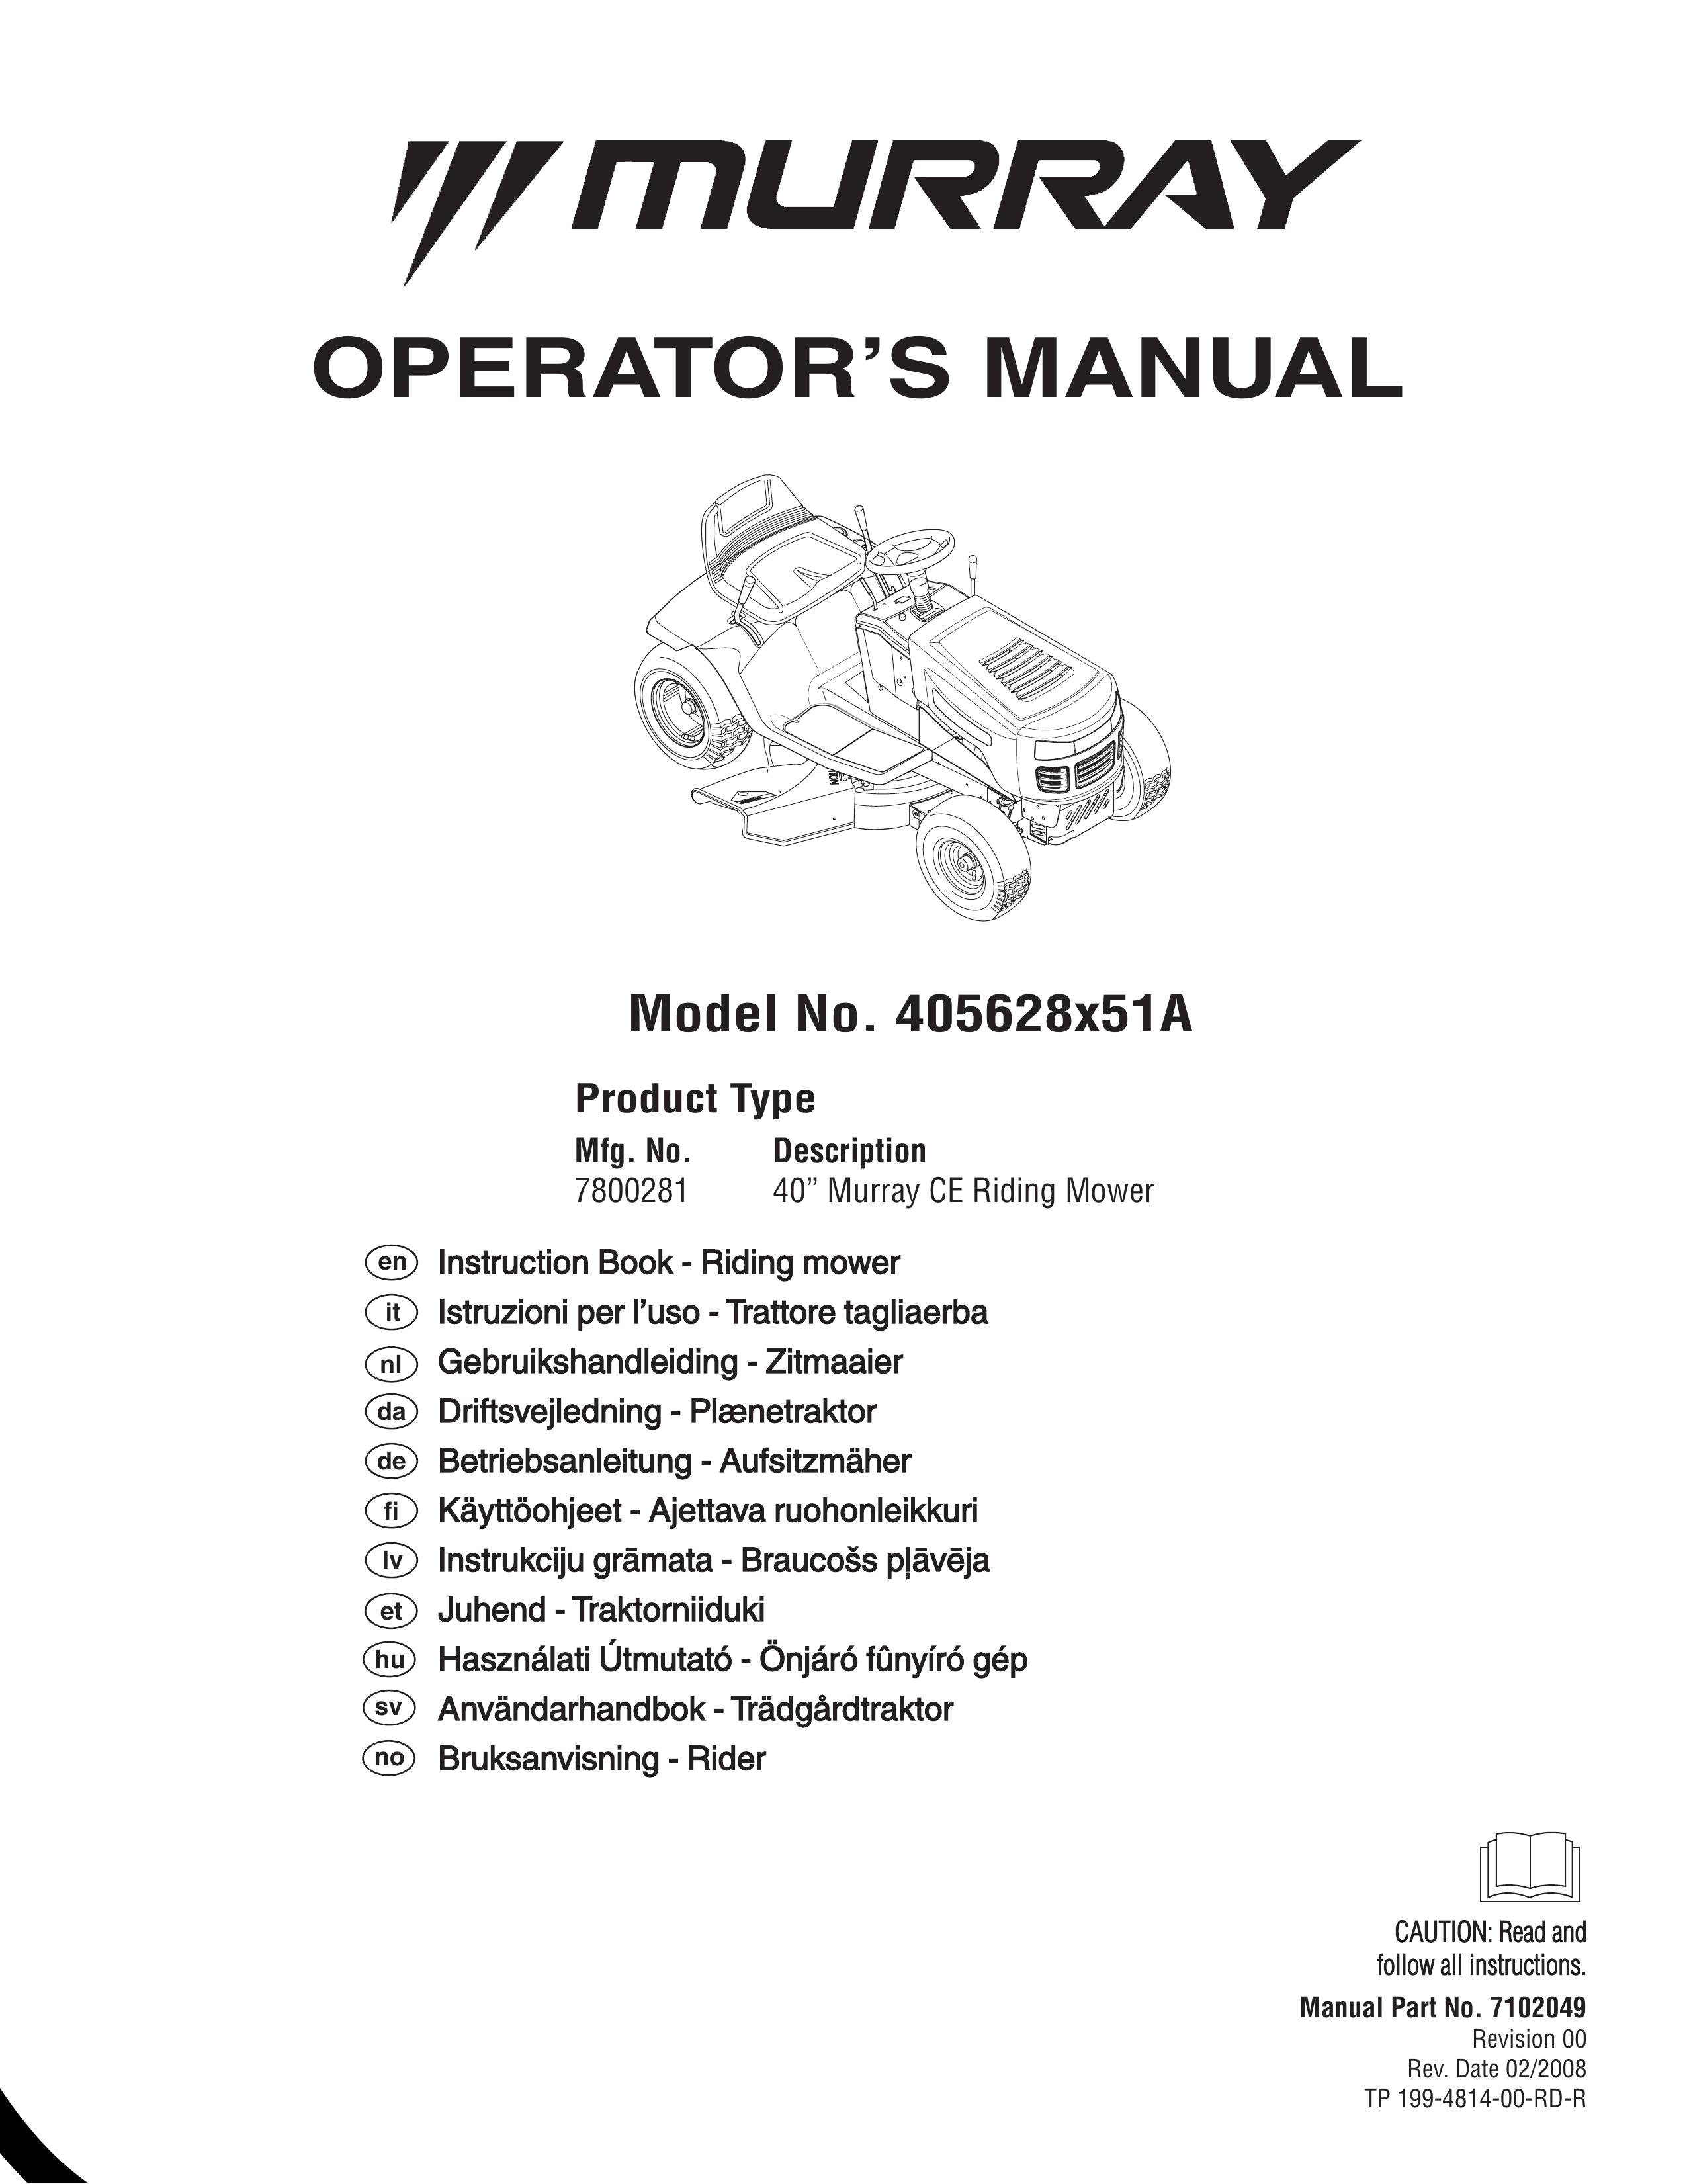 Murray 405628x51A Lawn Mower User Manual